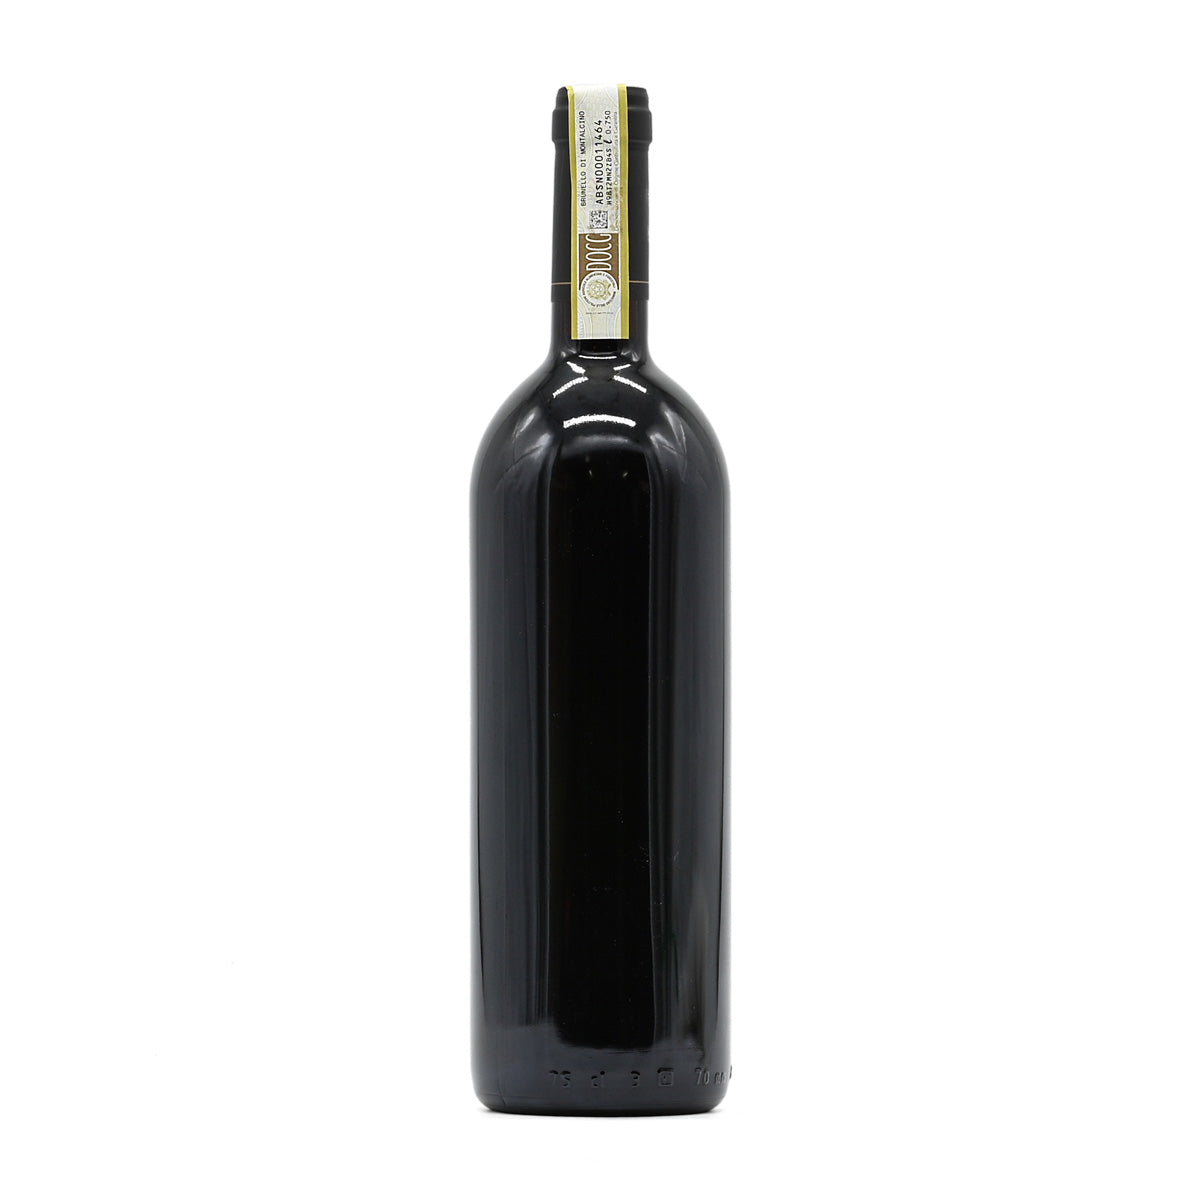 Conti Costanti Brunello di Montalcino Riserva 2015, 750ml Italian red wine, made from Sangiovese, from Brunello di Montalcino DOCG, Tuscany, Italy – GDV Fine Wines, Hong Kong